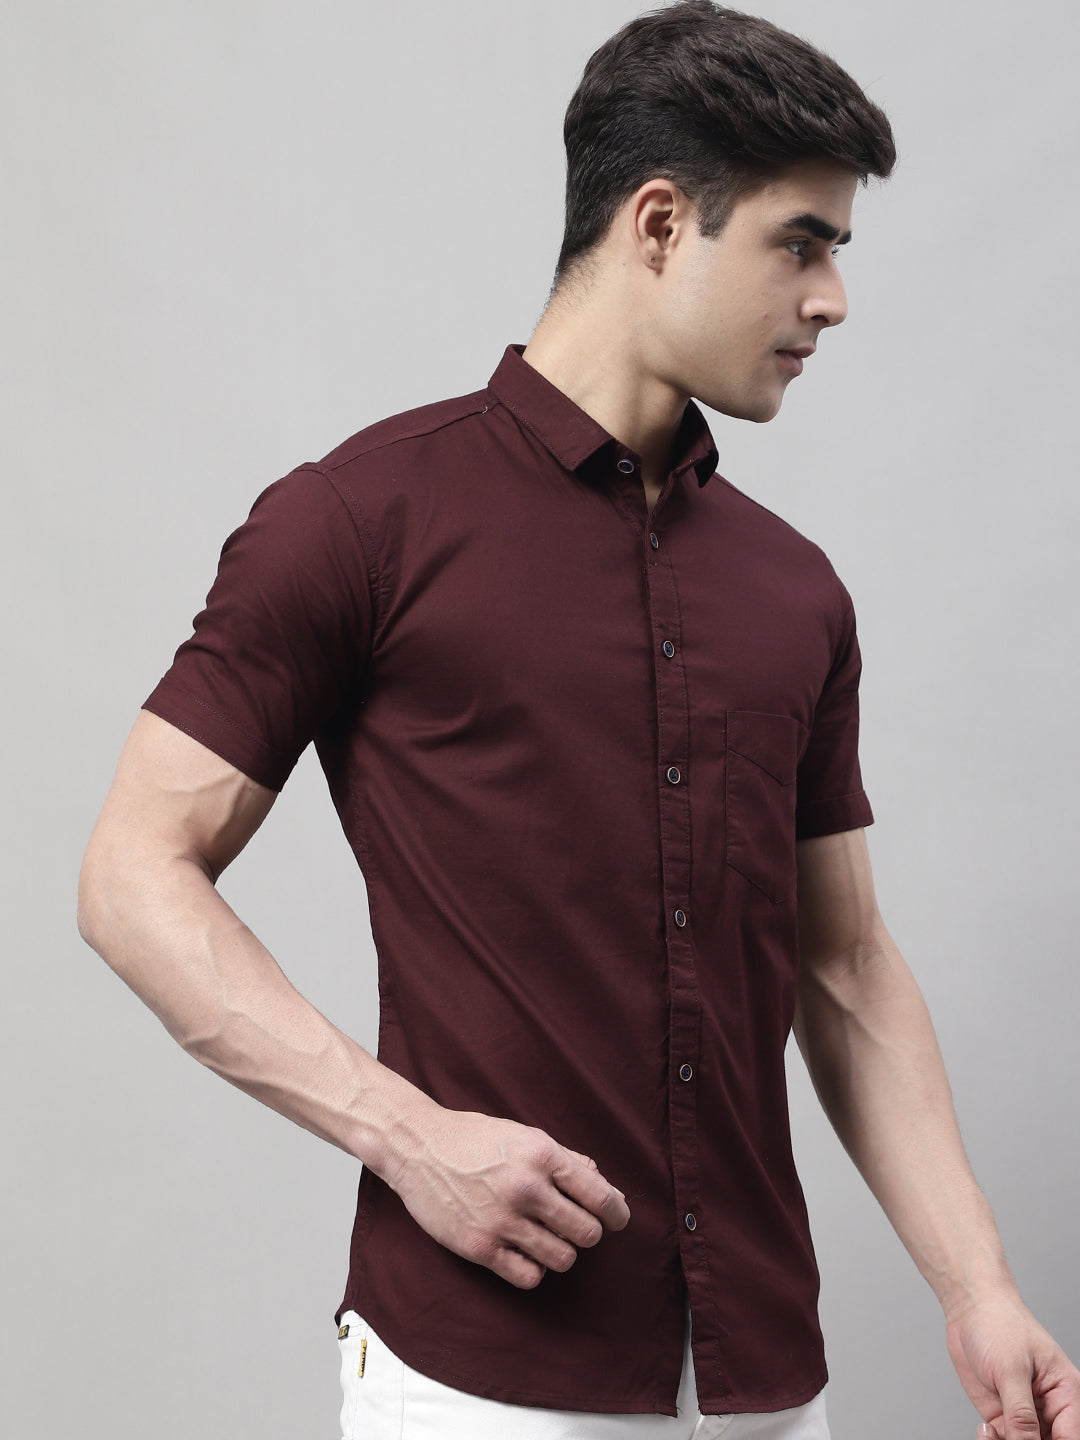 Unique and Fashionable Pure Cotton Half shirt - Wine